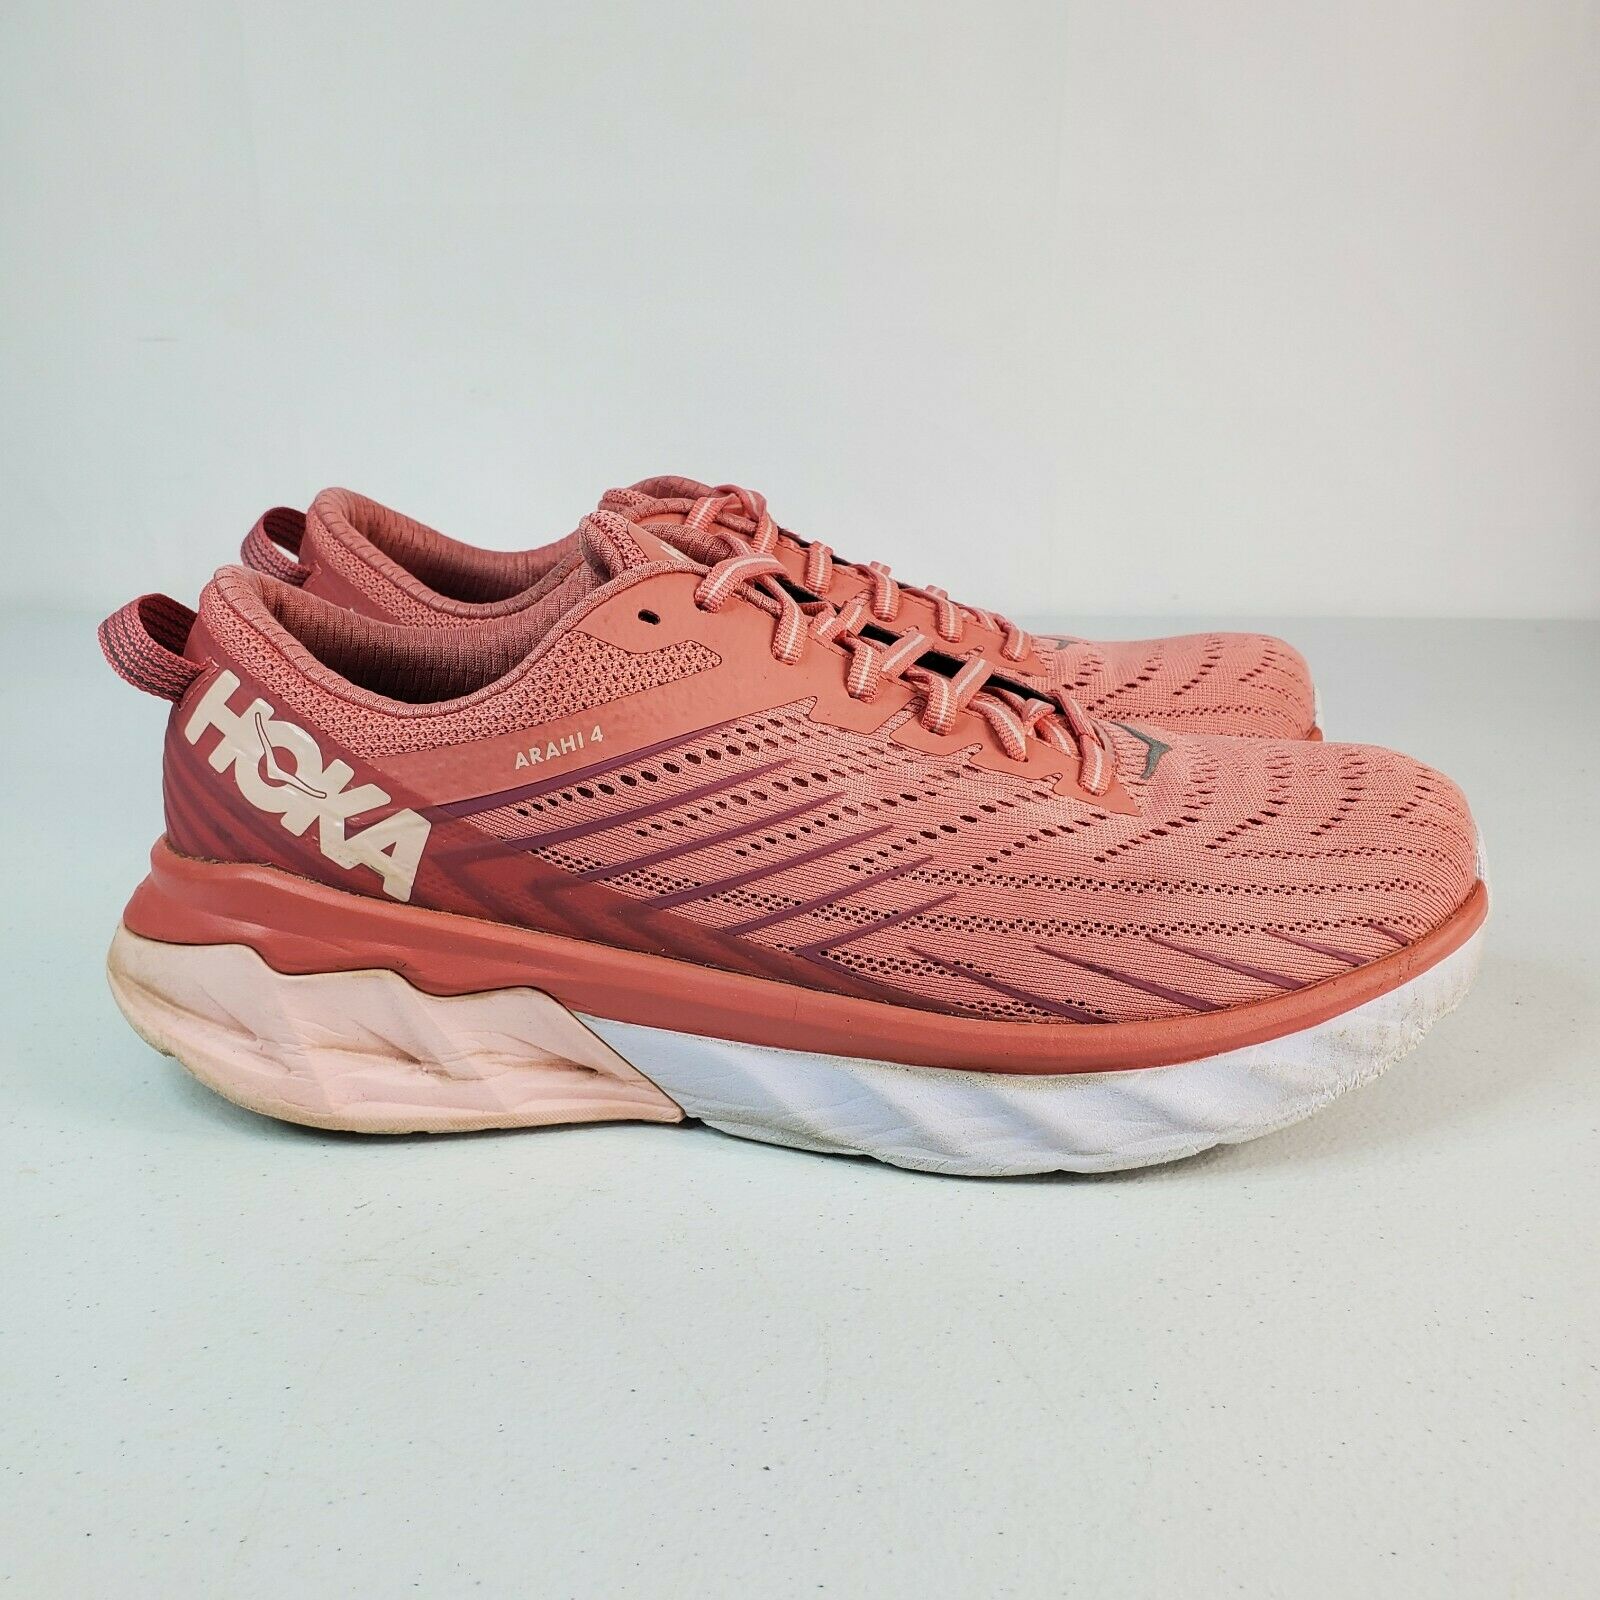 Hoka One One Arahi 4 Womens Pink Athletic Running Walking Shoes Size 11